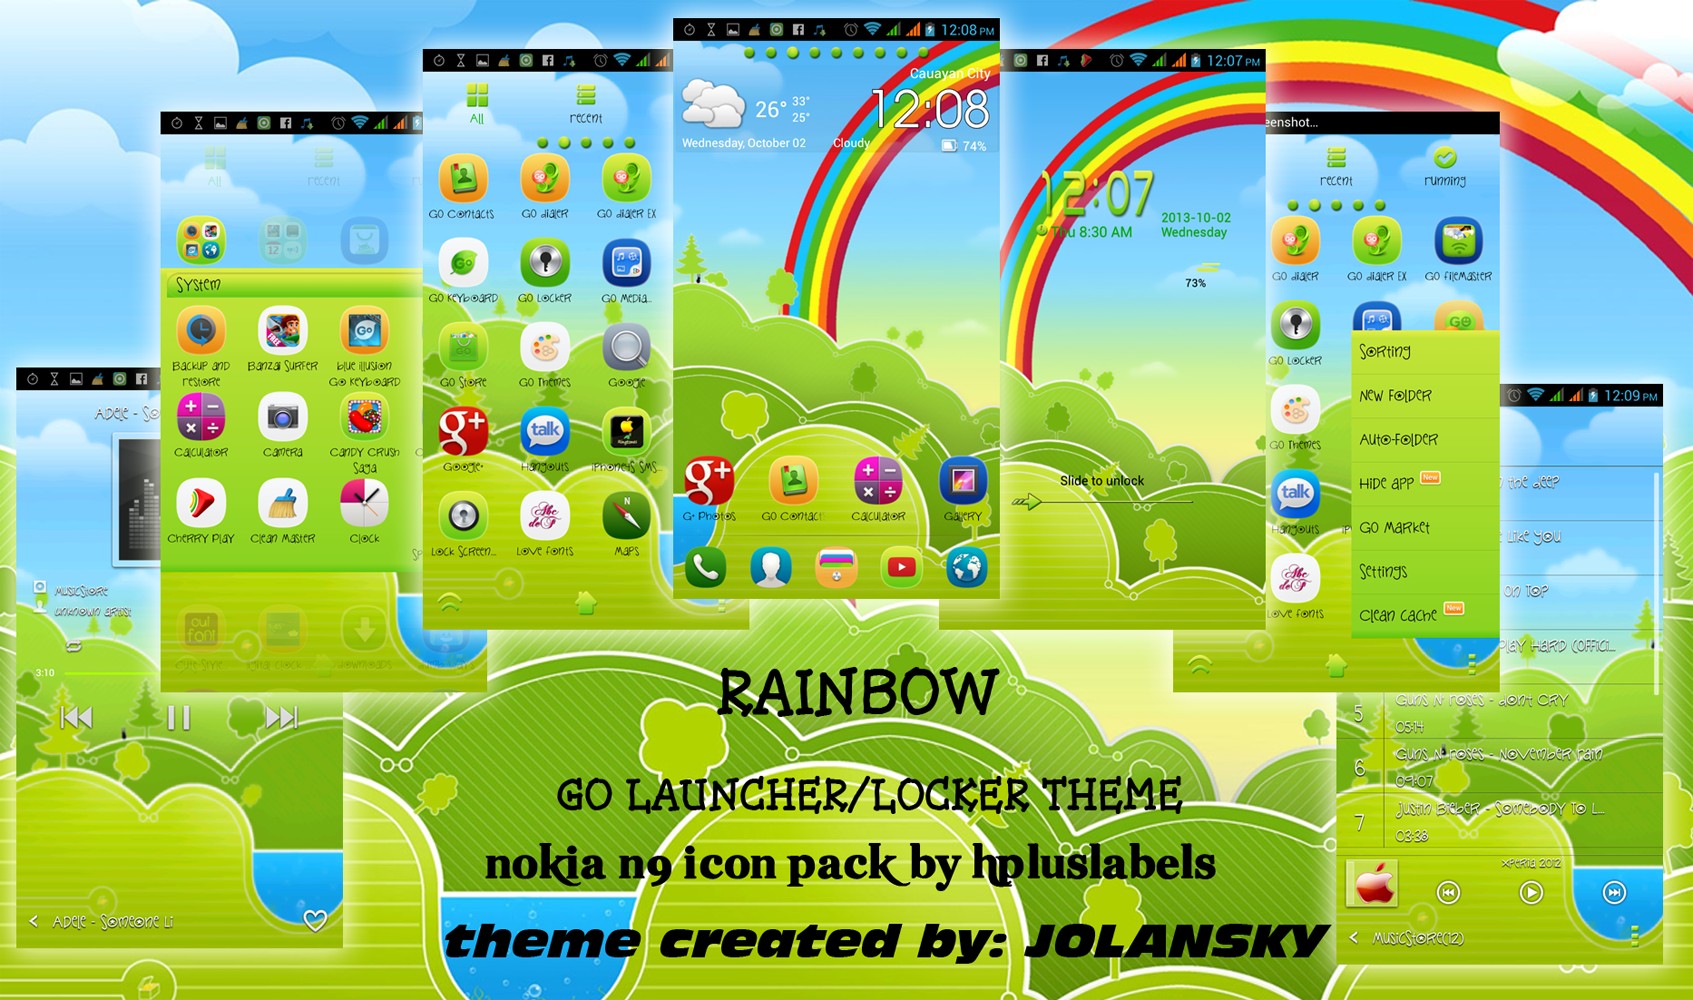 Rainbow Go Launcher